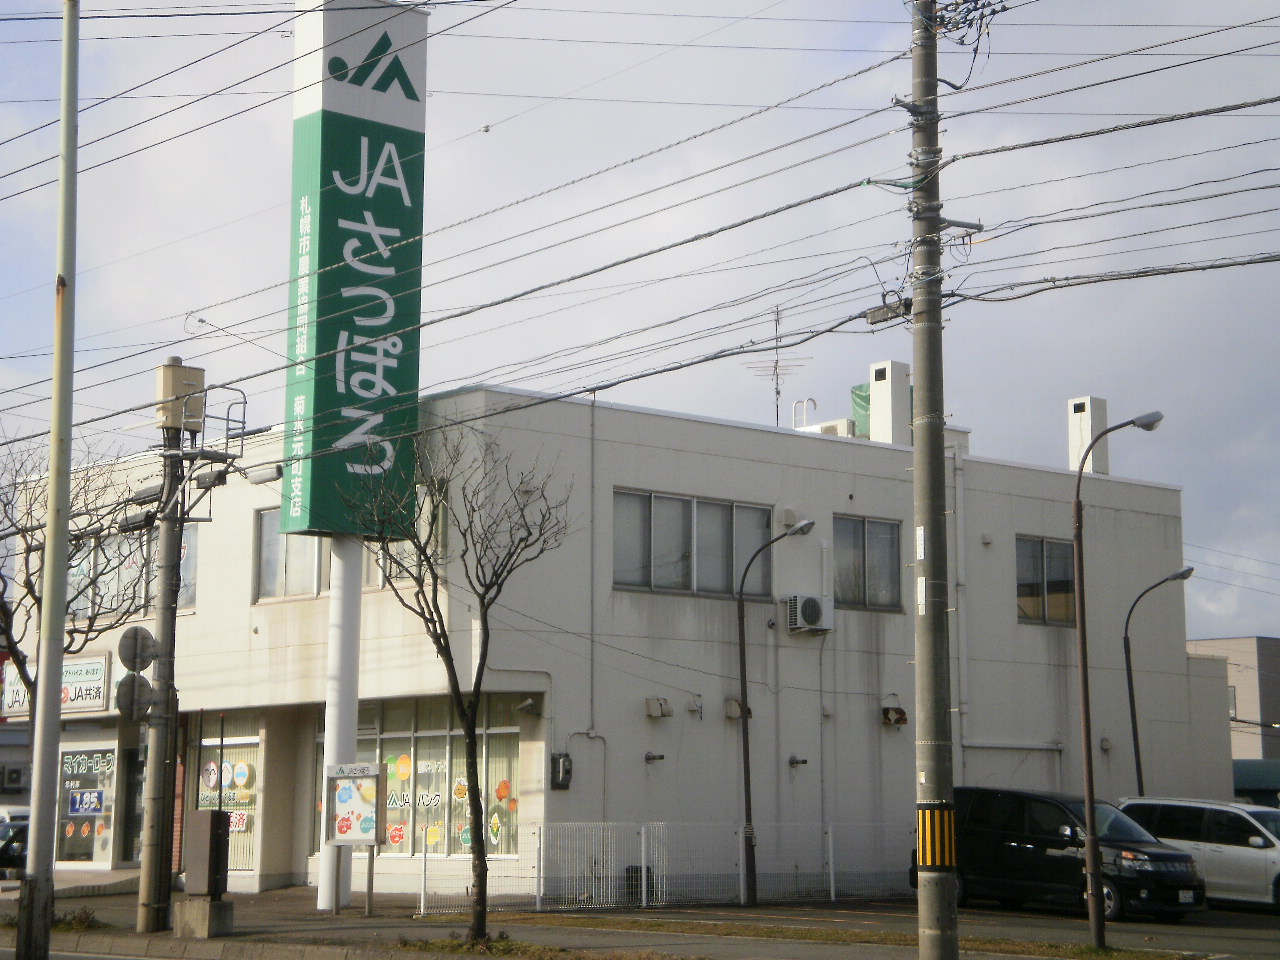 Bank. JA Sapporo 504m to Kikusuimoto machi Branch (Bank)